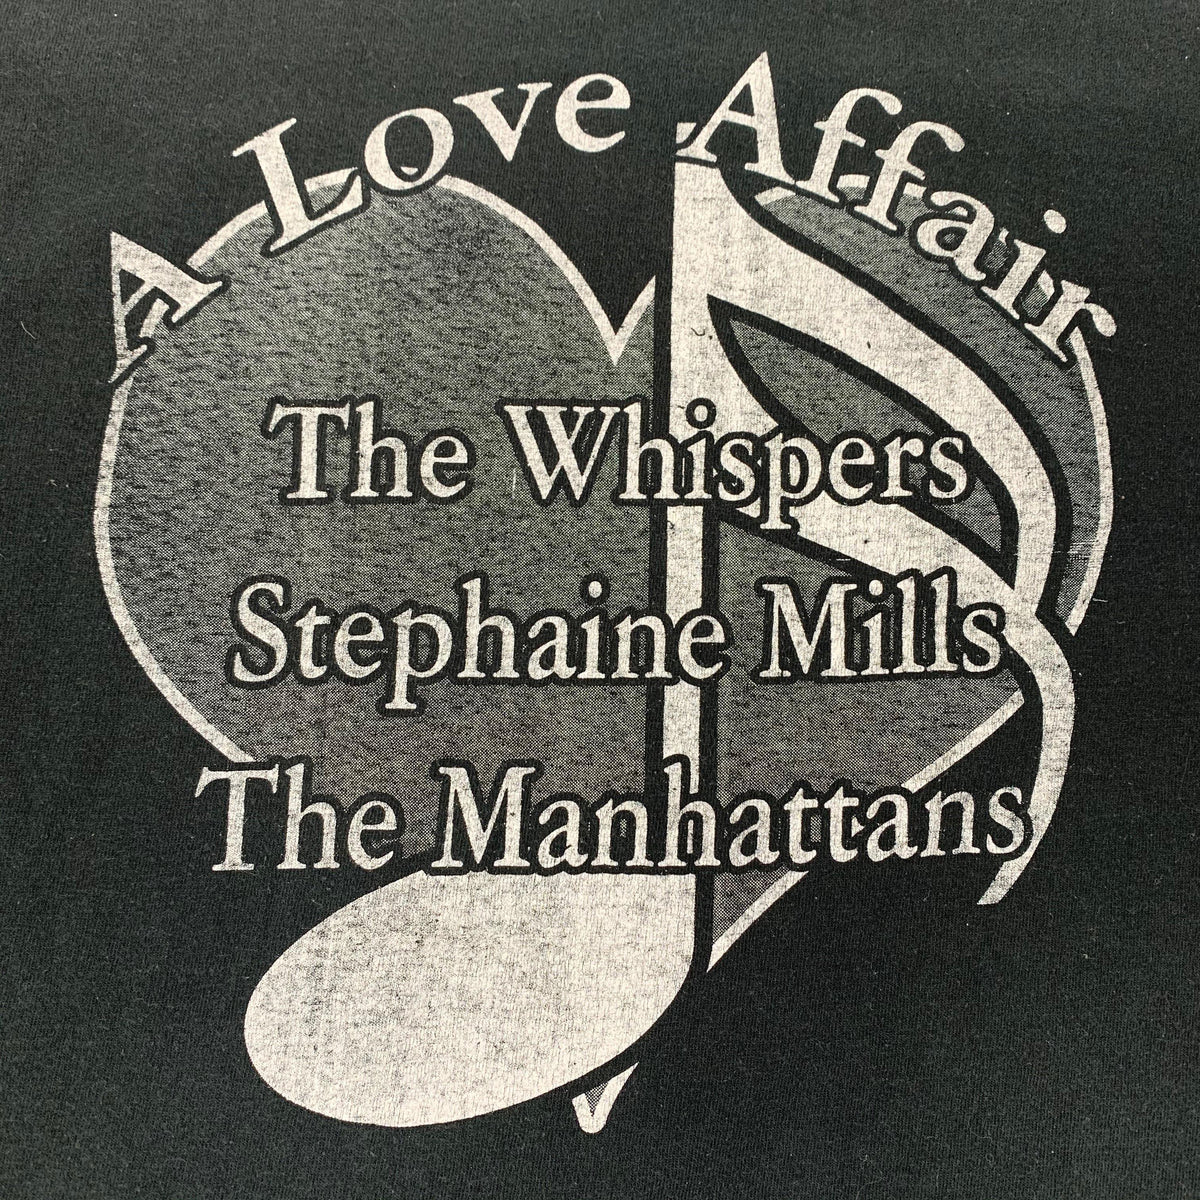 Vintage The Manhattans &quot;A Valentine Celebration&quot; Long Sleeve Shirt - jointcustodydc